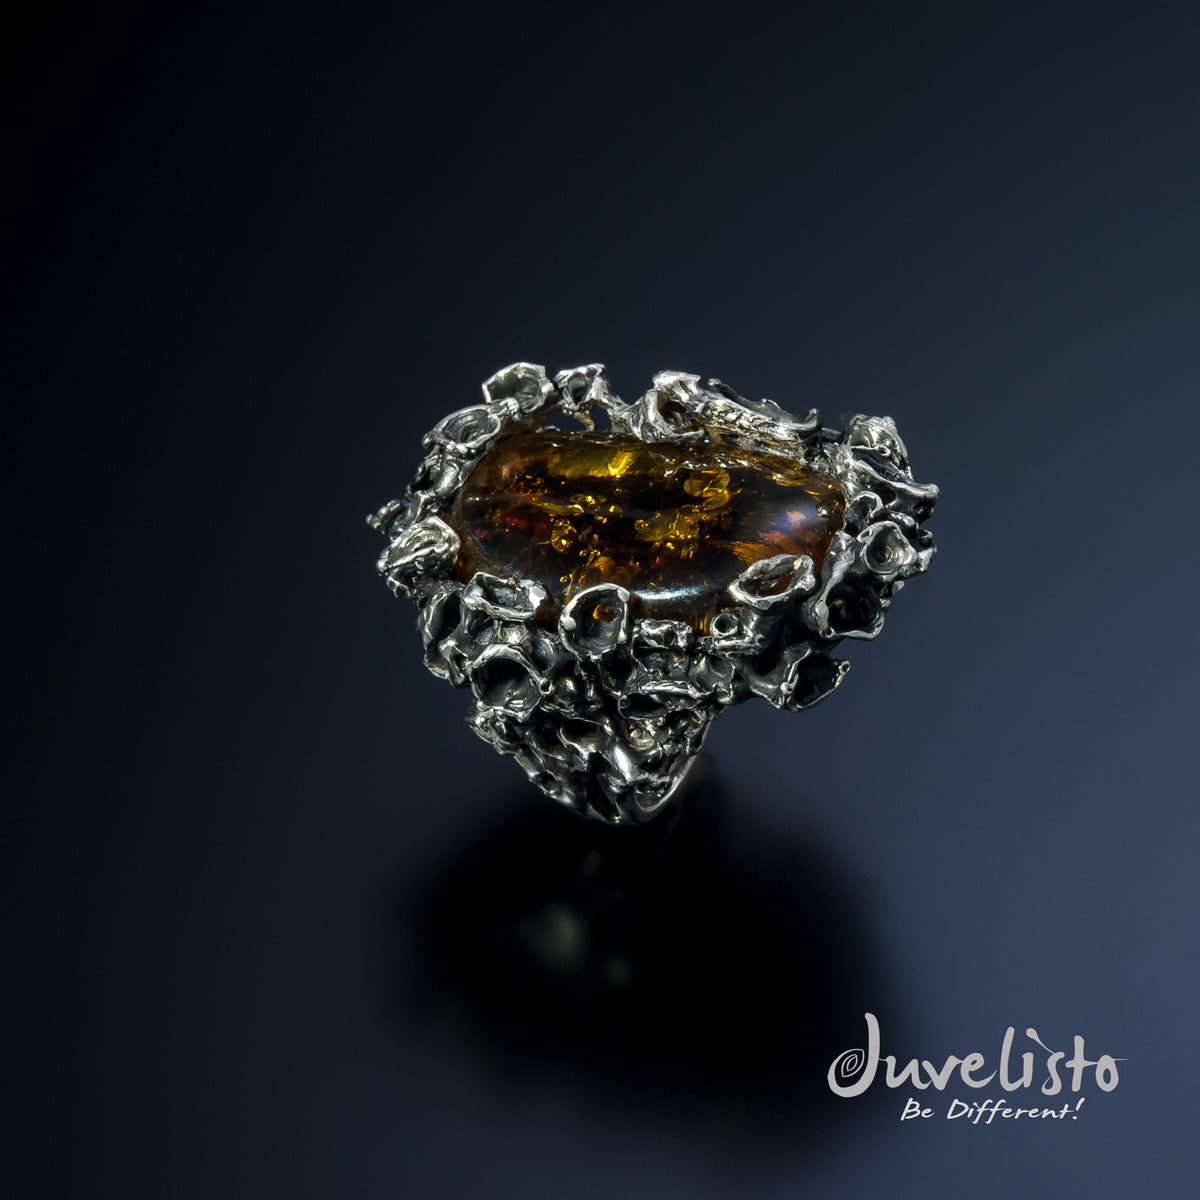 Barnacle Ring Silver with Baltic Amber JDORG042 - Juvelisto - Ring - Juvelisto Design